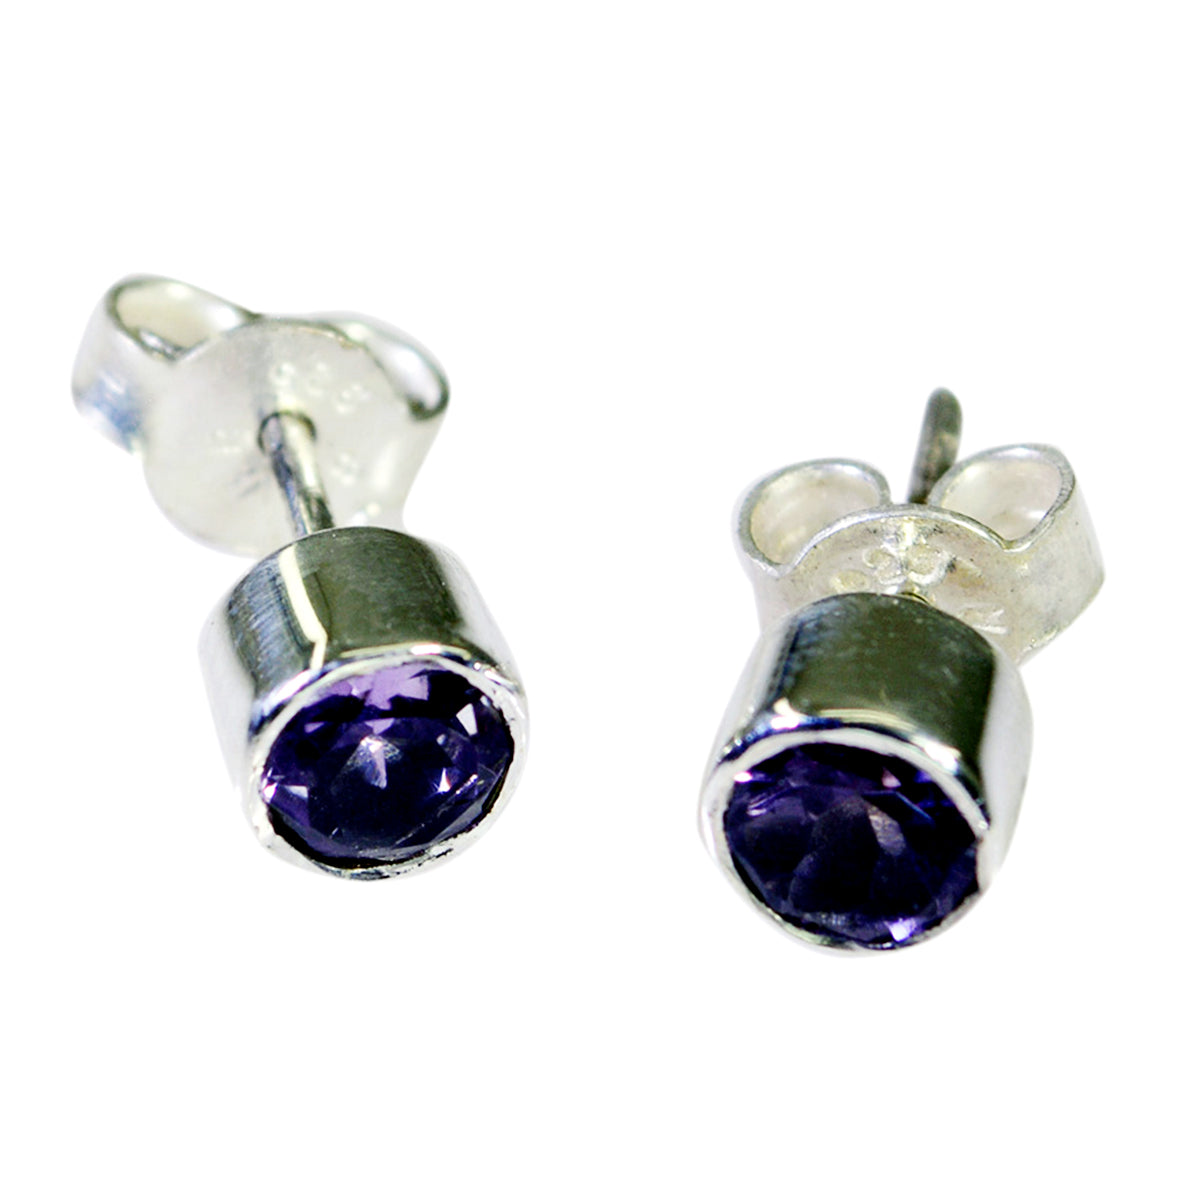 Riyo Genuine Gems round Faceted Purple Amethyst Silver Earrings frinendship day gift